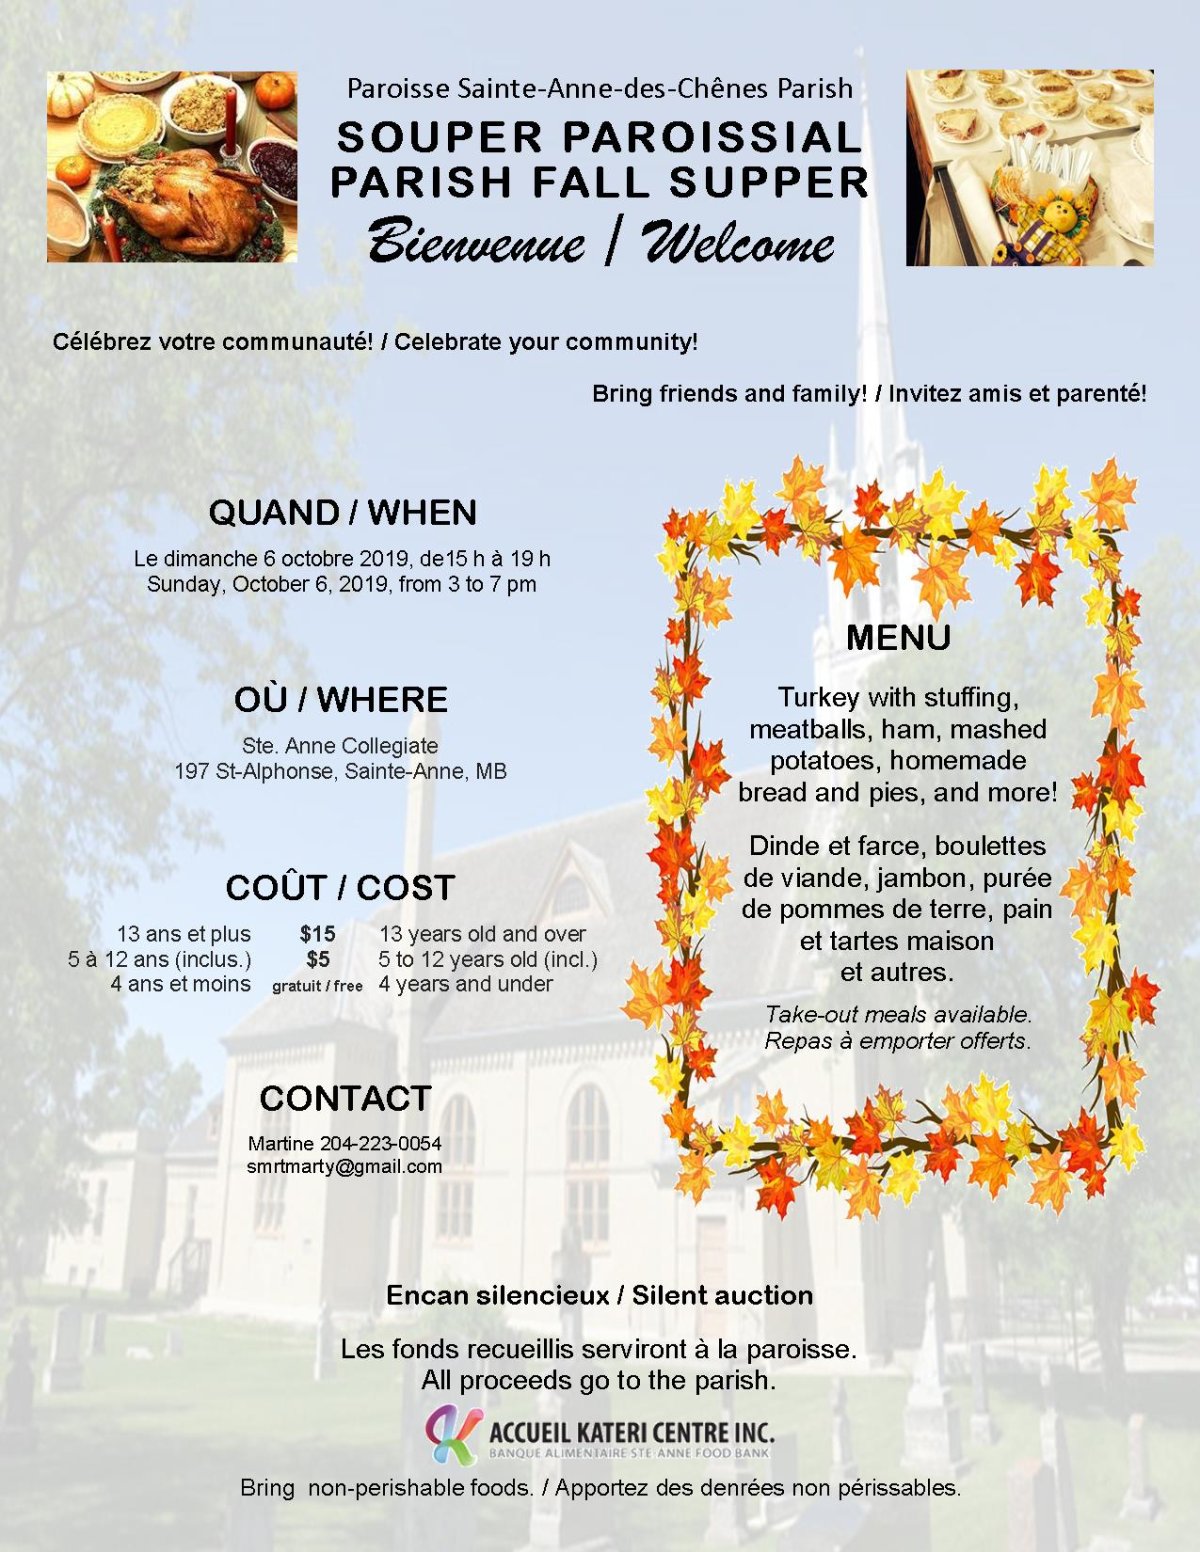 Fall Supper – Parish of Sainte-Anne-des-Chênes - image